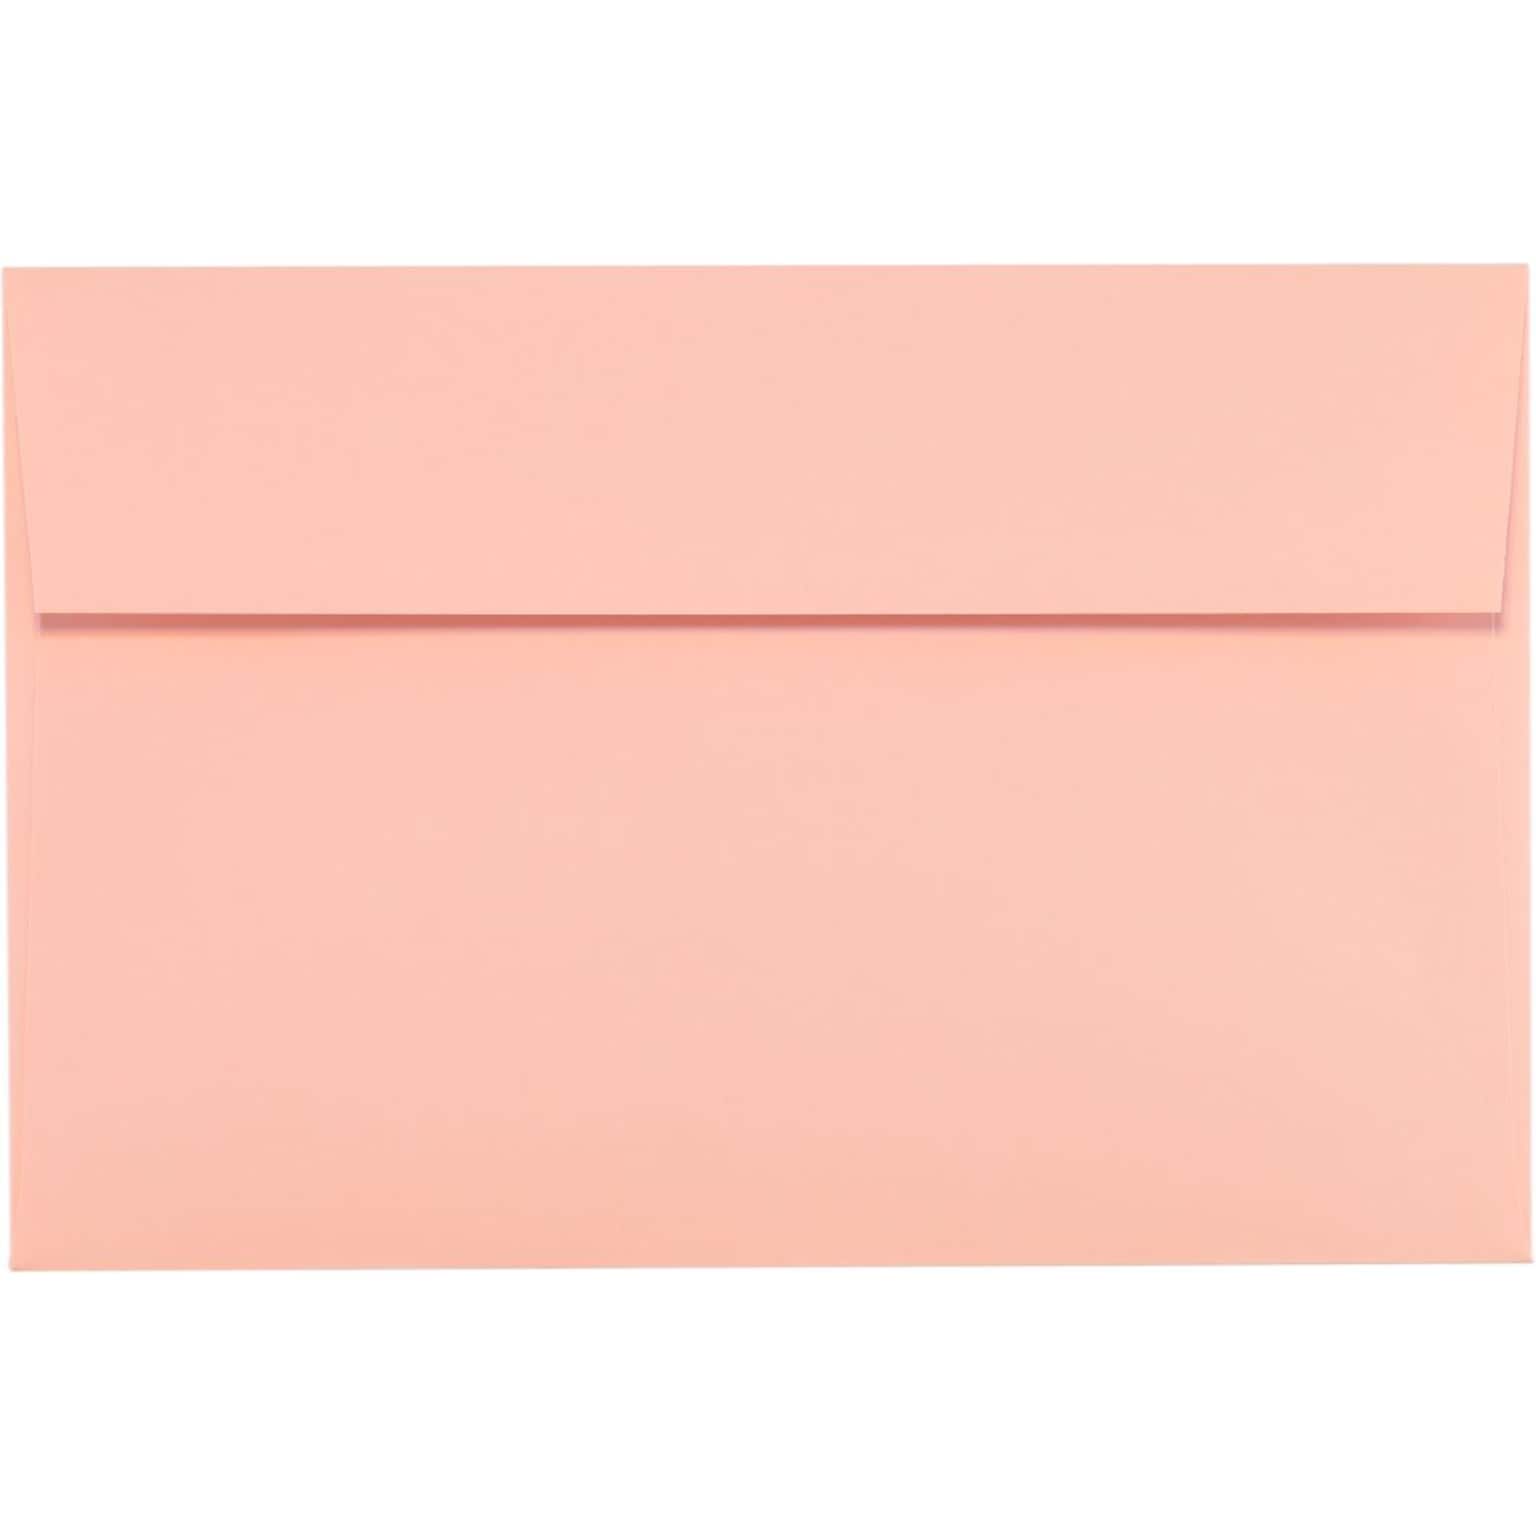 LUX A9 Invitation Envelopes (5 3/4 x 8 3/4) 50/Pack, Blush (LUX-4895-39-50)